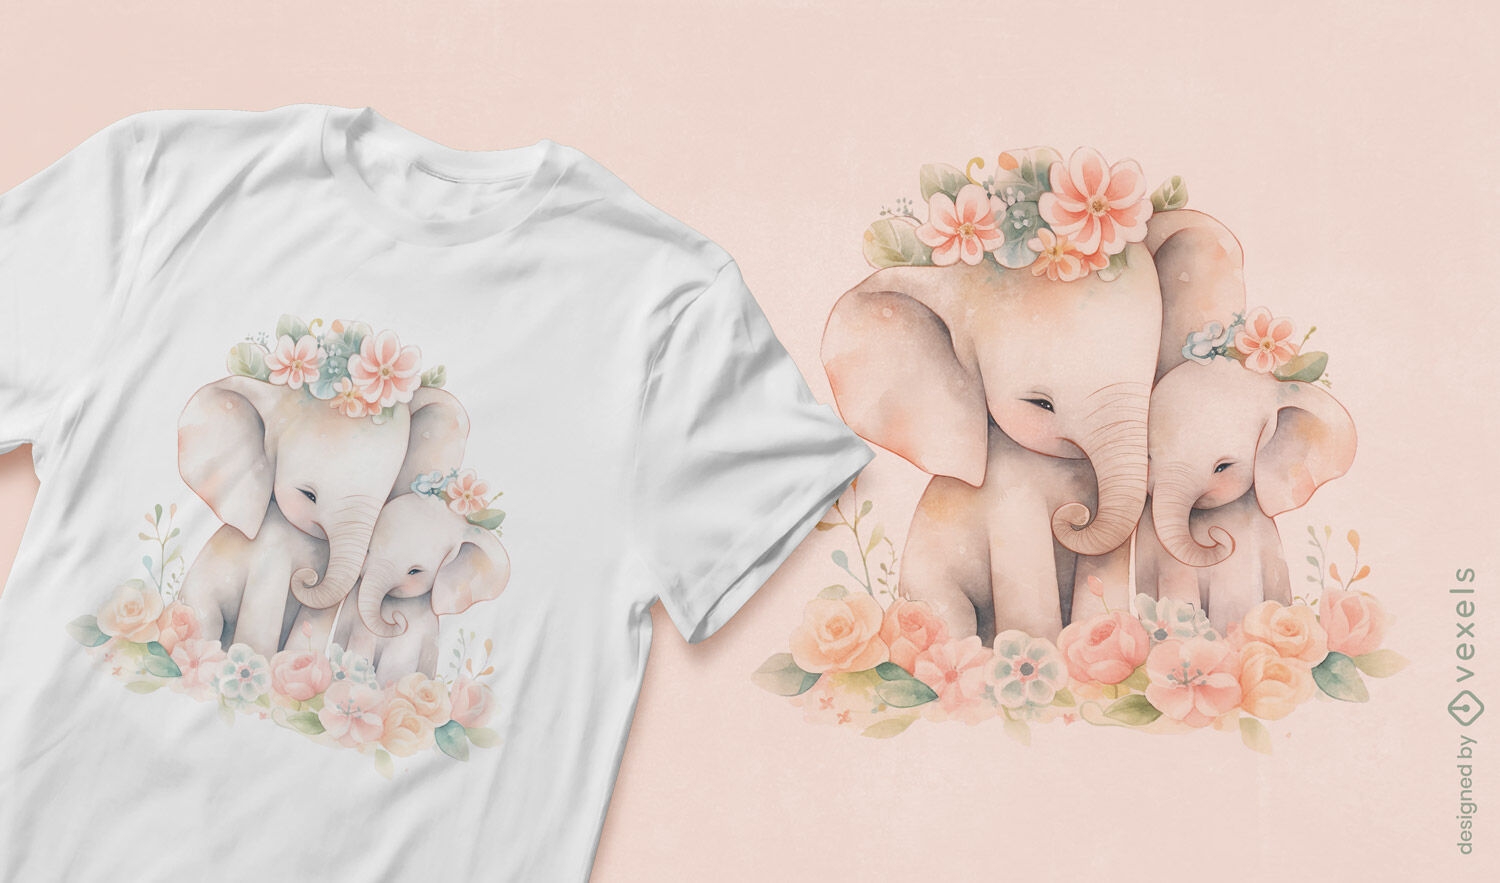 Dise?o de camiseta de elefantes beb?s con flores.